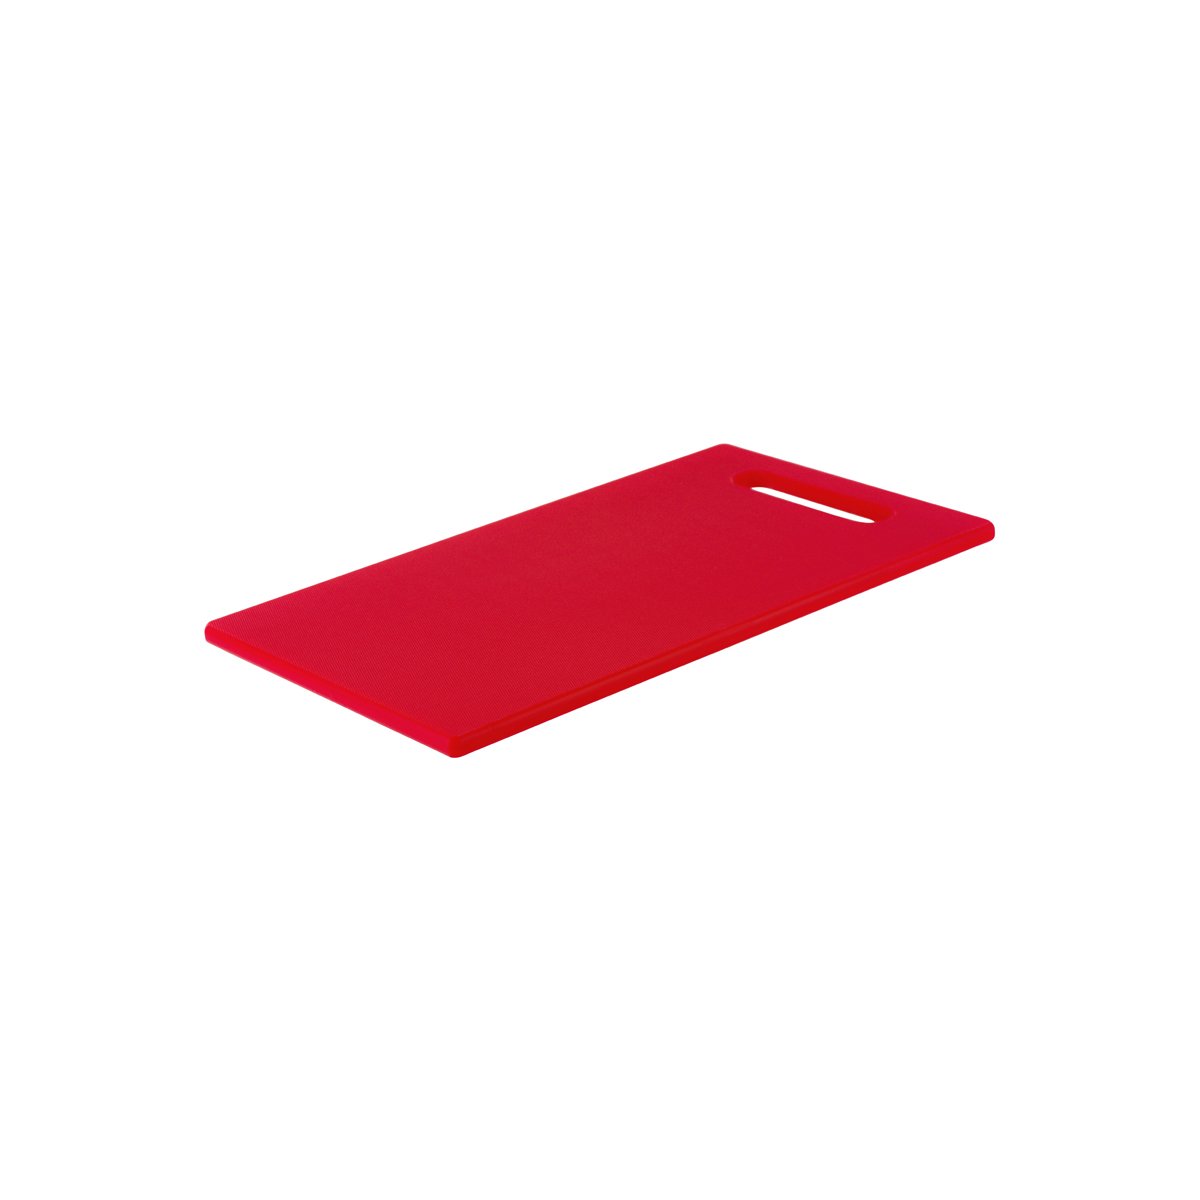 04348 Chef Inox Cutting Board Polyethylene Red with Handle 300x450x12mm Tomkin Australia Hospitality Supplies